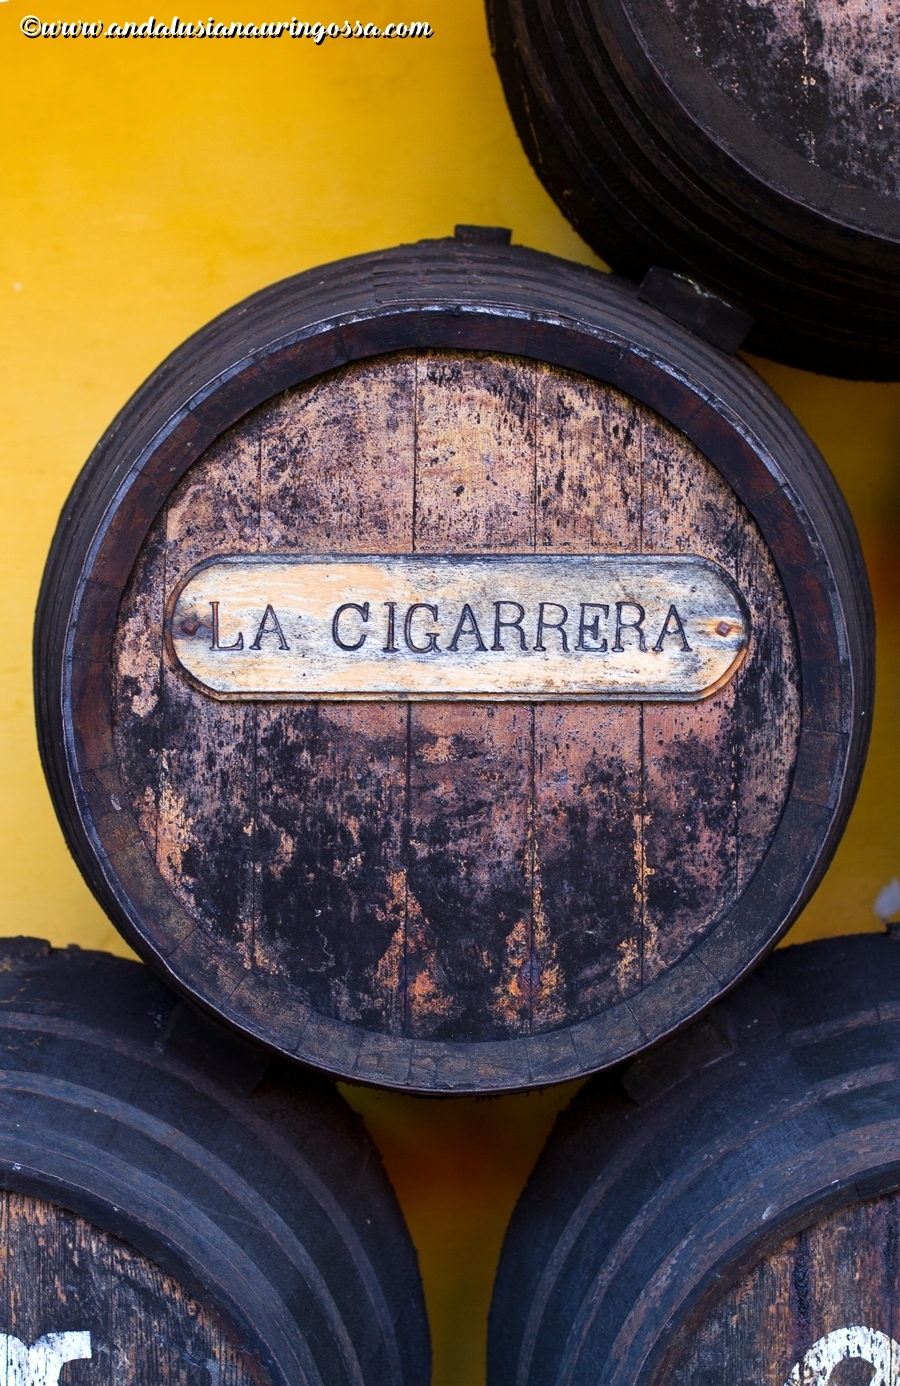 La Cigarrera_sherry_sherrybodega_Andalusia_Espanja_Andalusian auringossa_ruokablogi_matkablogi_viiniblogi